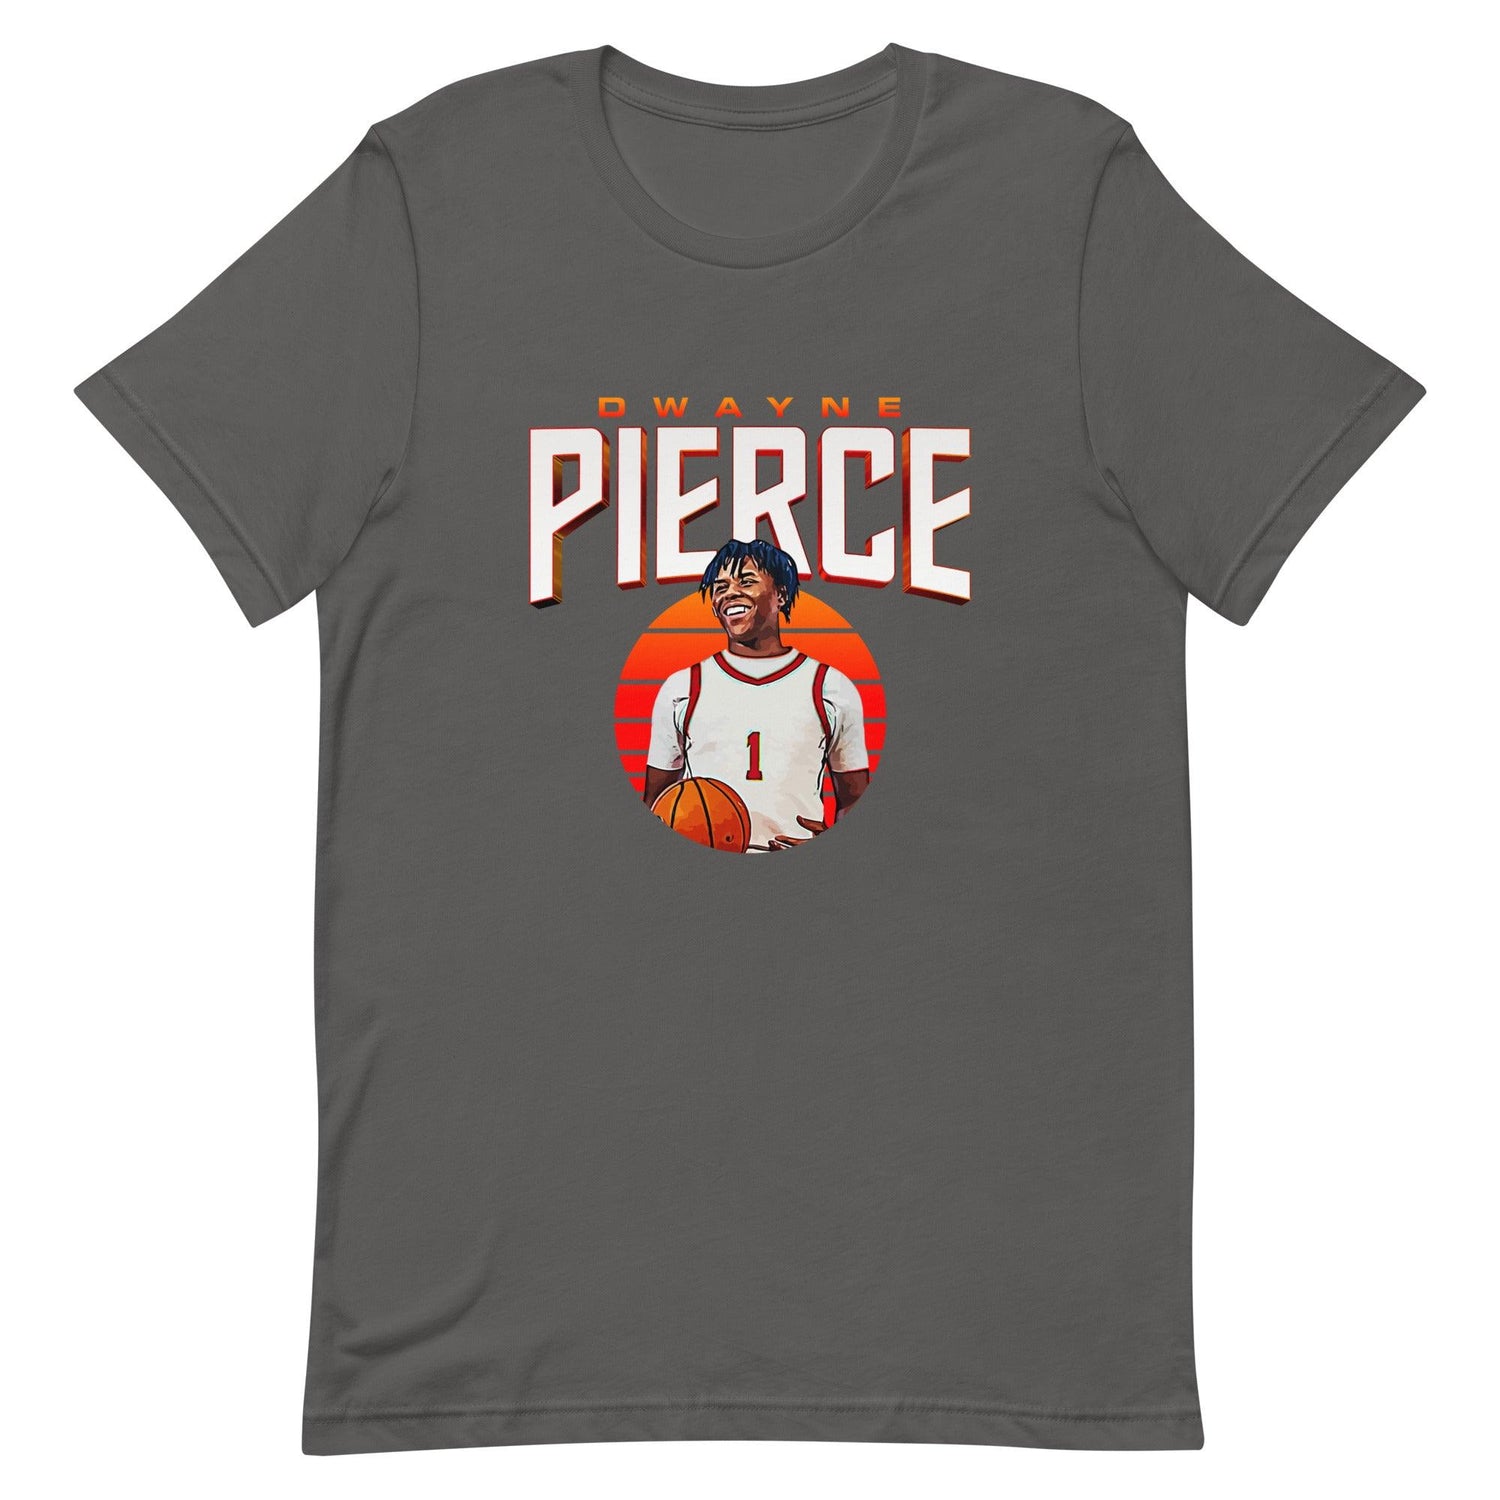 Dwayne Pierce "Gameday" t-shirt - Fan Arch